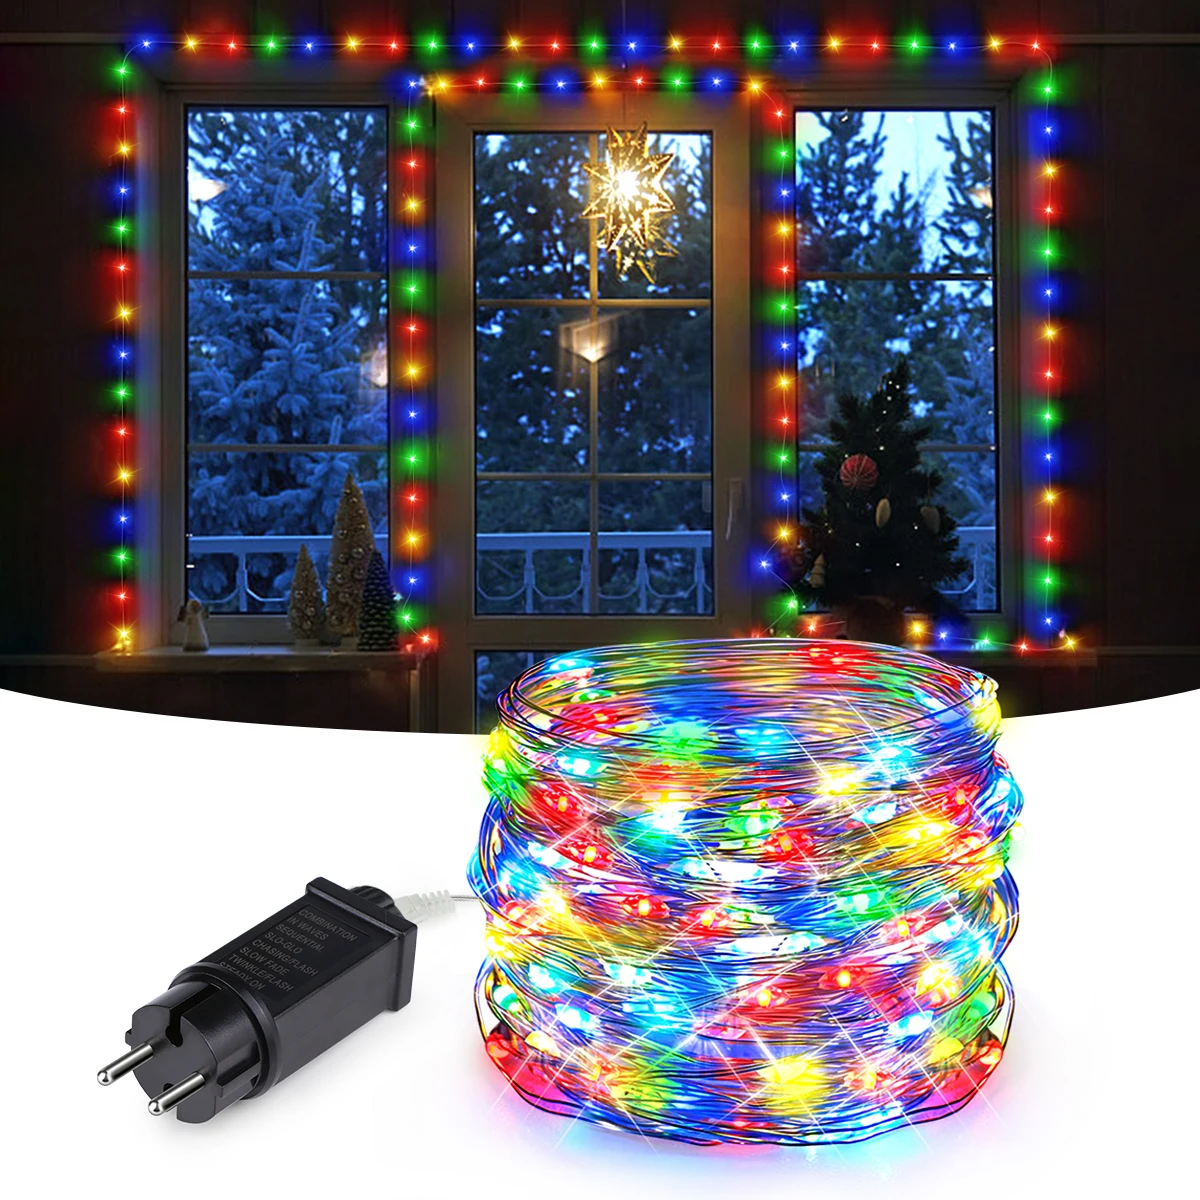 https://ae01.alicdn.com/kf/S079d3abf2d4e4d2494fea6512789d5a3y/100M-50M-30M-20M-10M-LED-Copper-Wire-Christmas-Light-AC110V-220V-Fairy-String-Lights-Waterproof.jpg